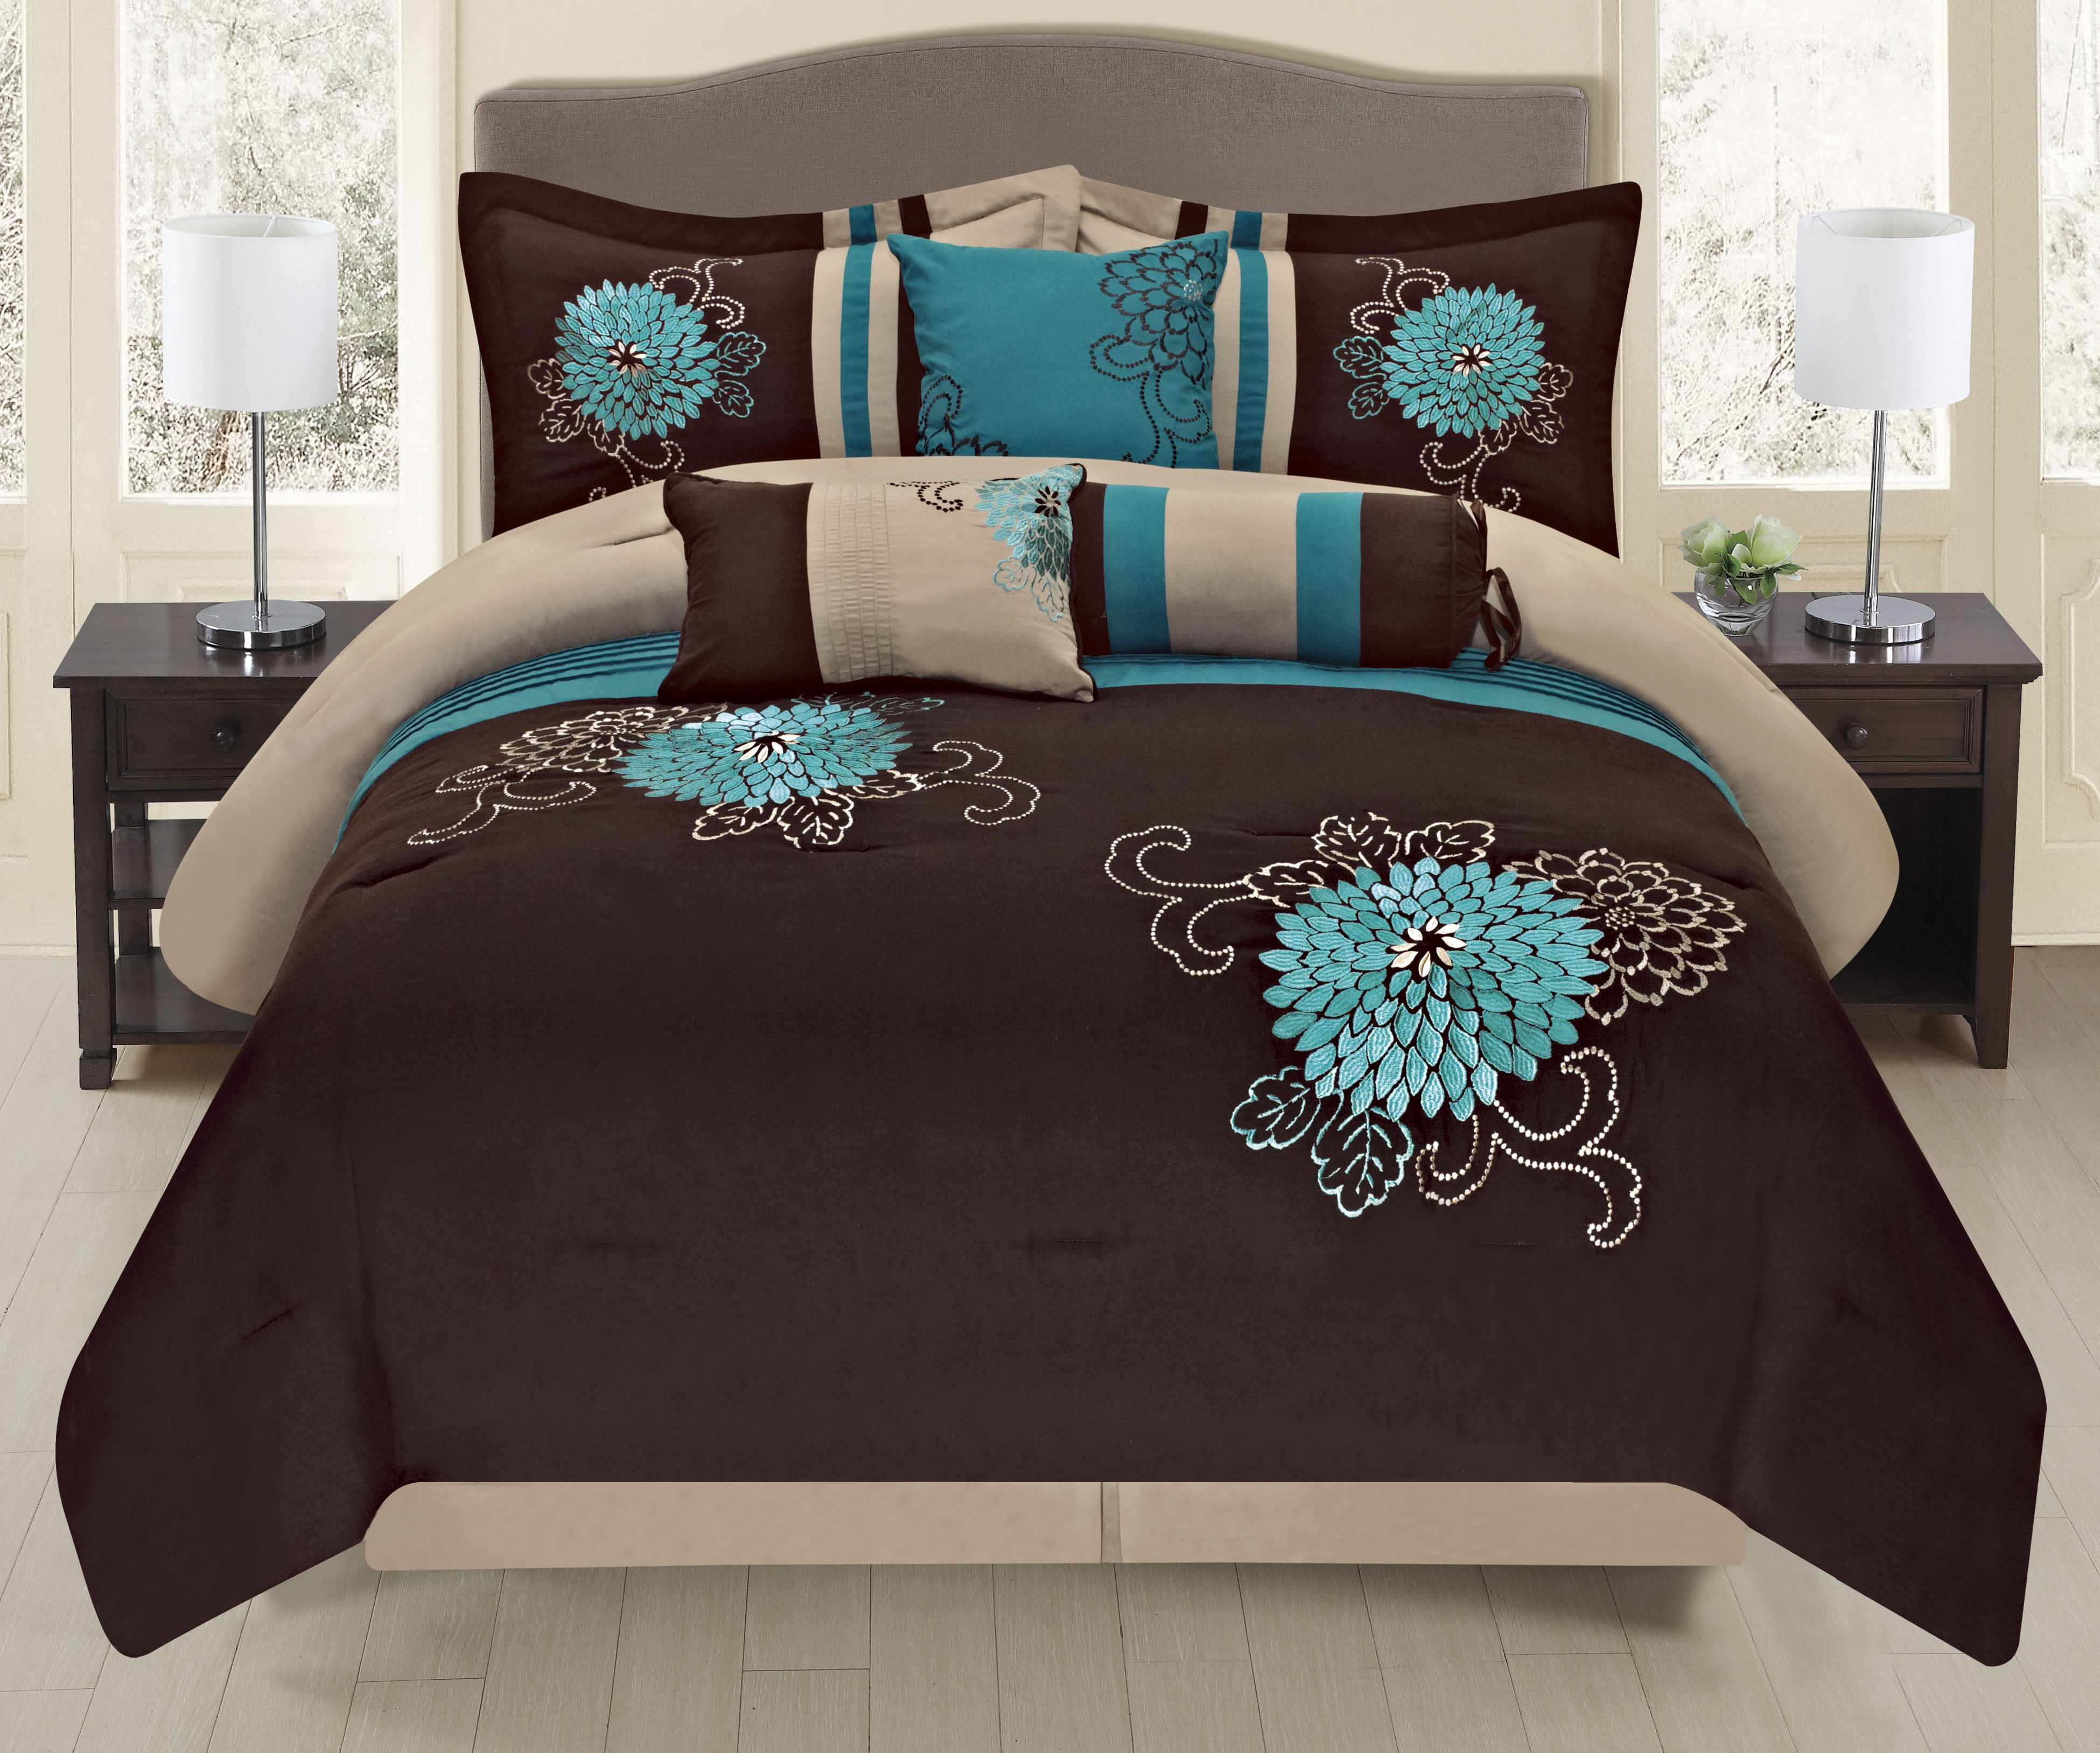 New Elegant Teal Grey Black Floral Embroidered 7pcs Cal King Queen Comforter Set 